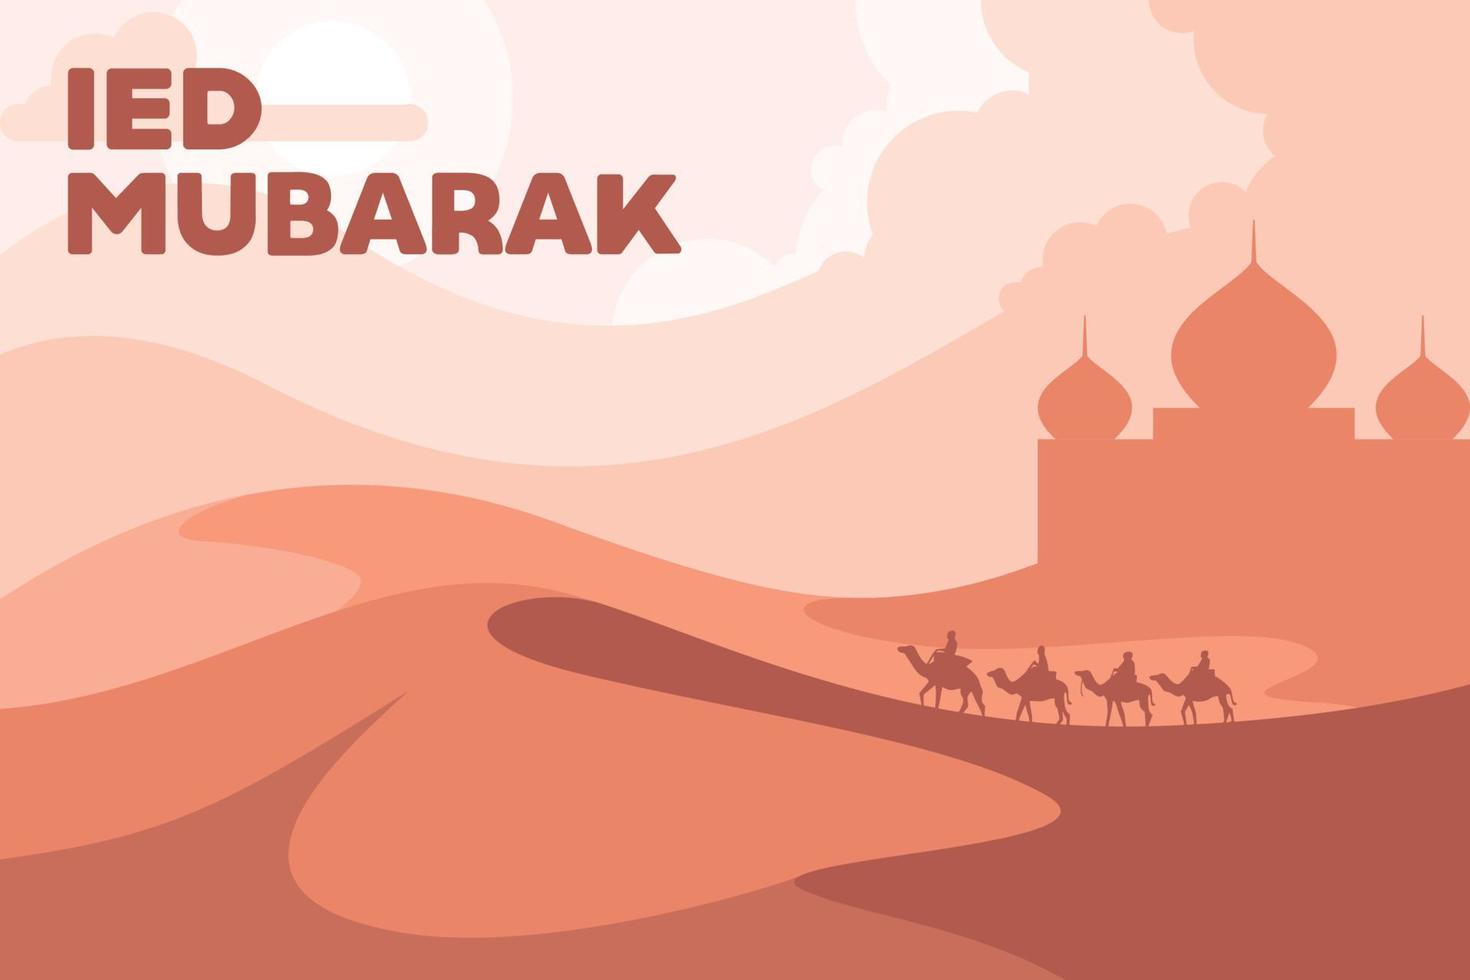 Ied Mubarak Desert Landscape vector